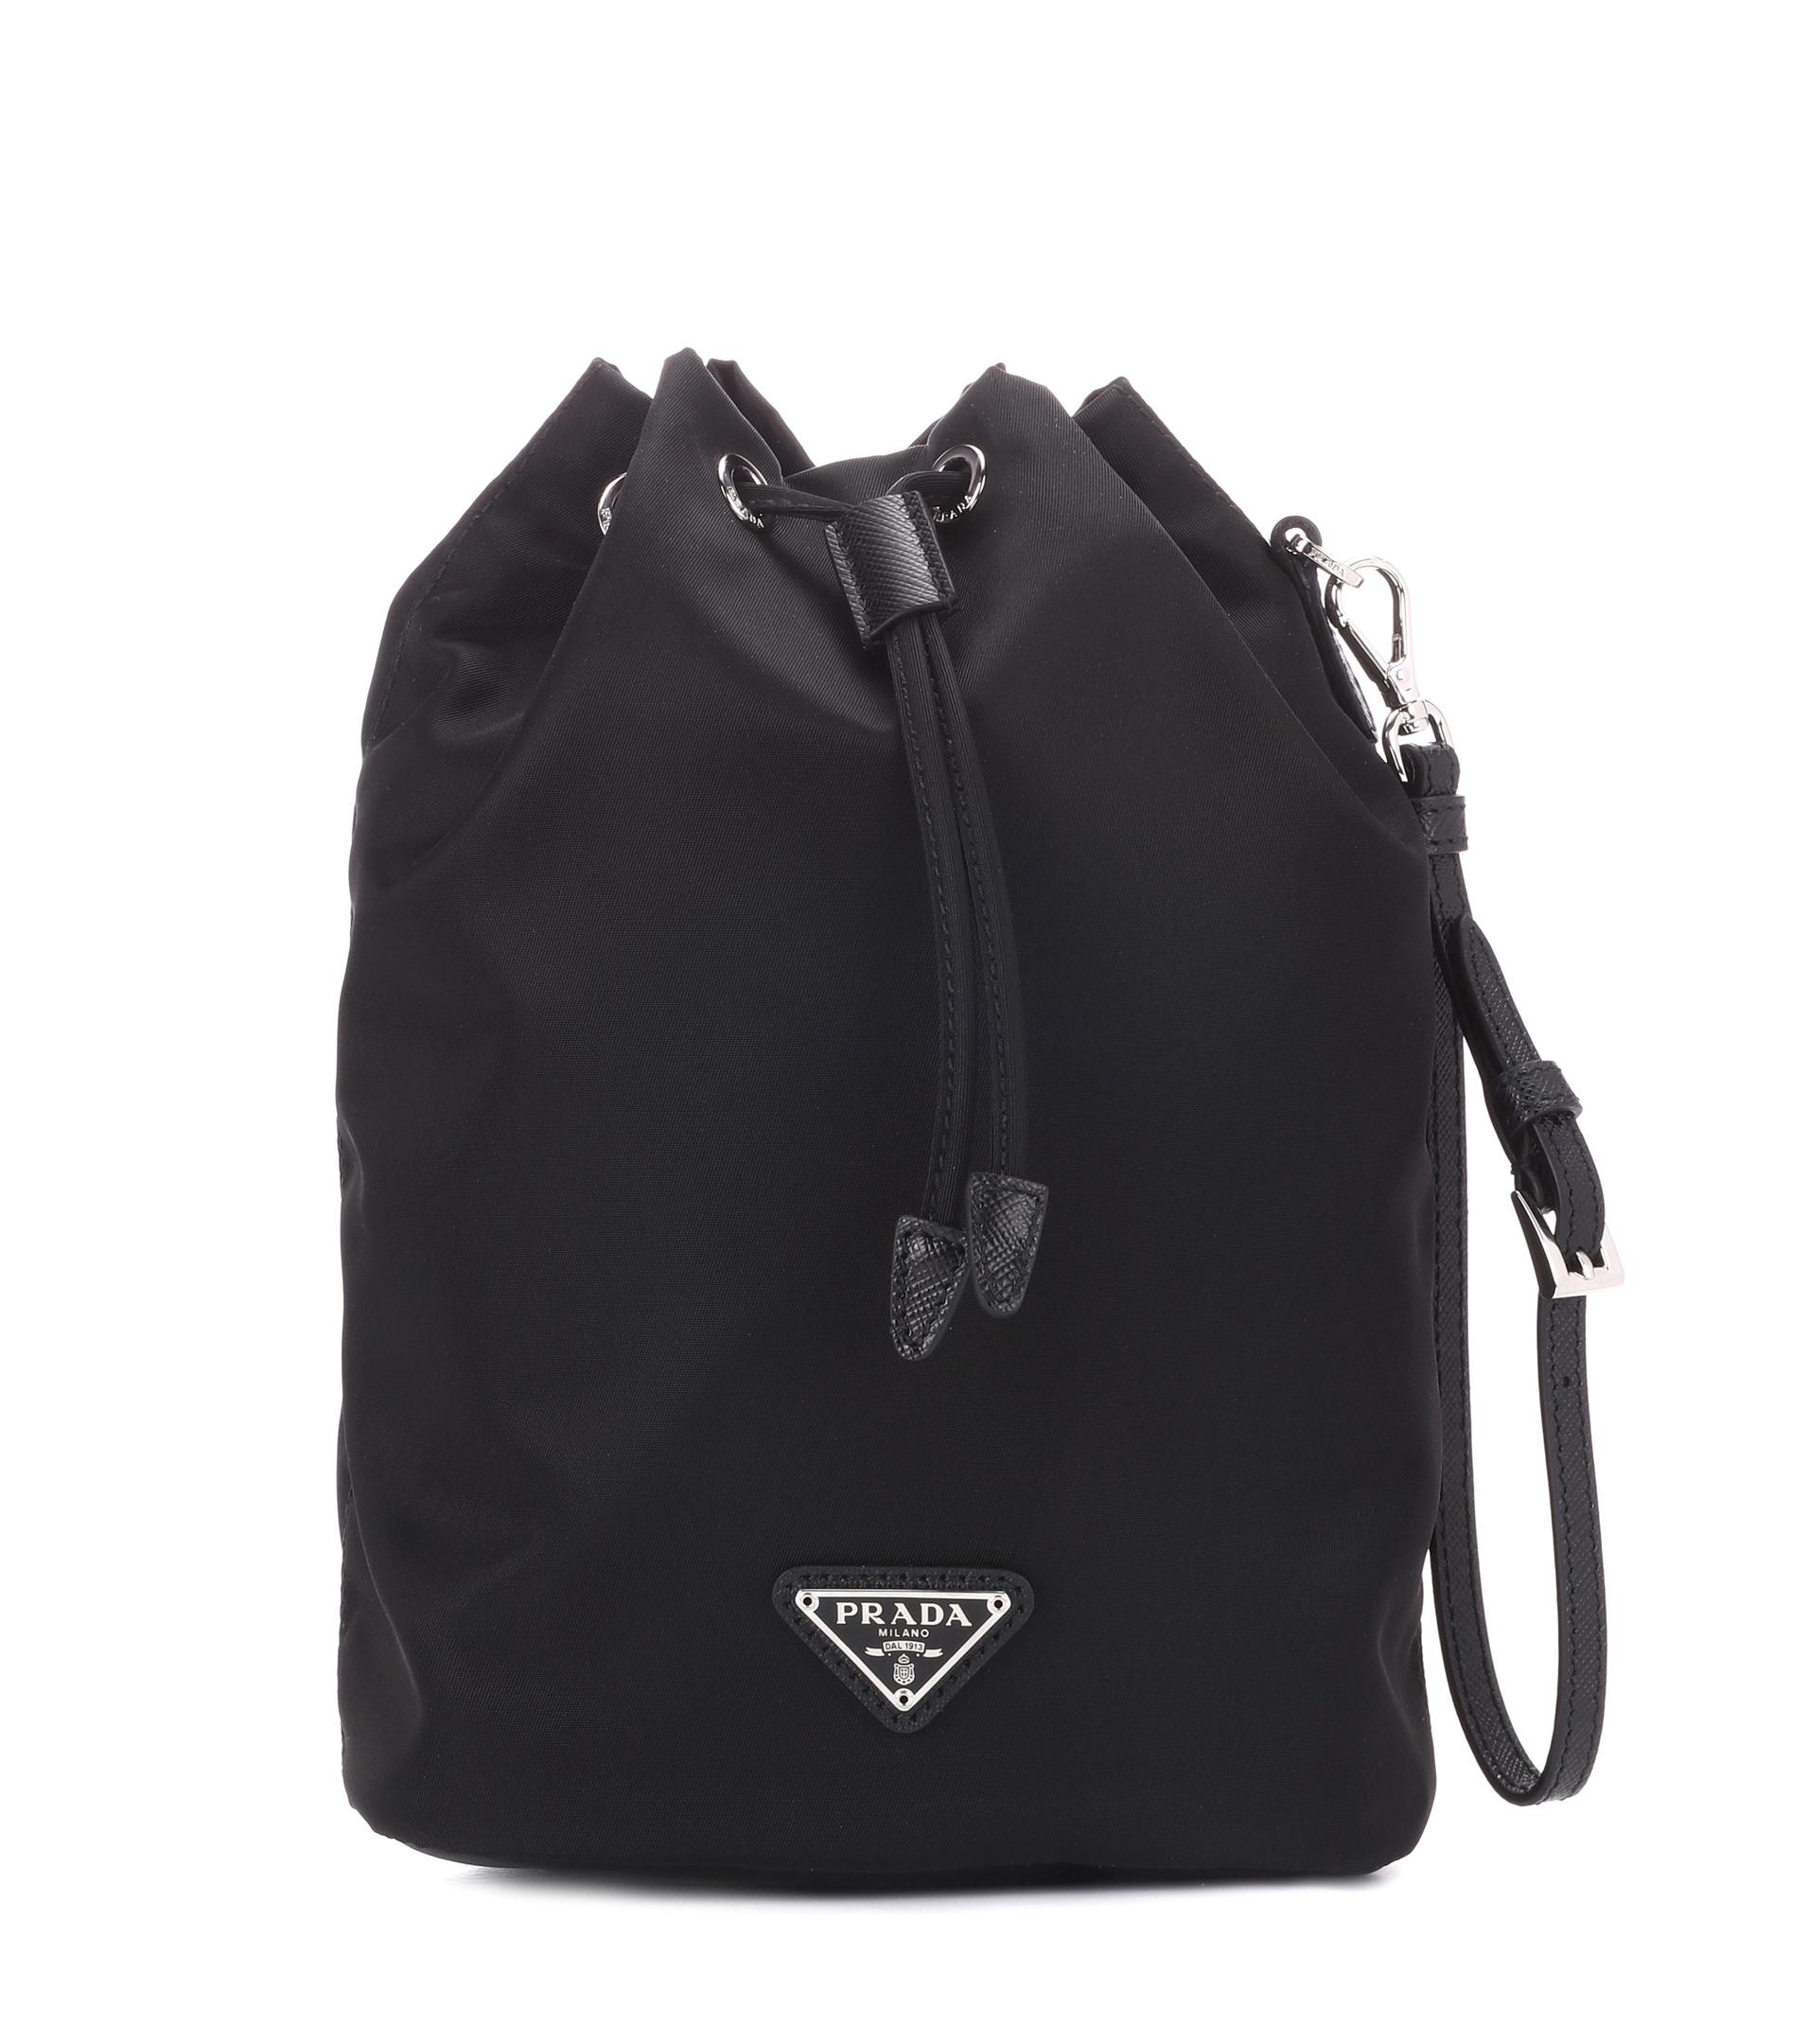 Prada Leather Bucket Bag in Black - Lyst